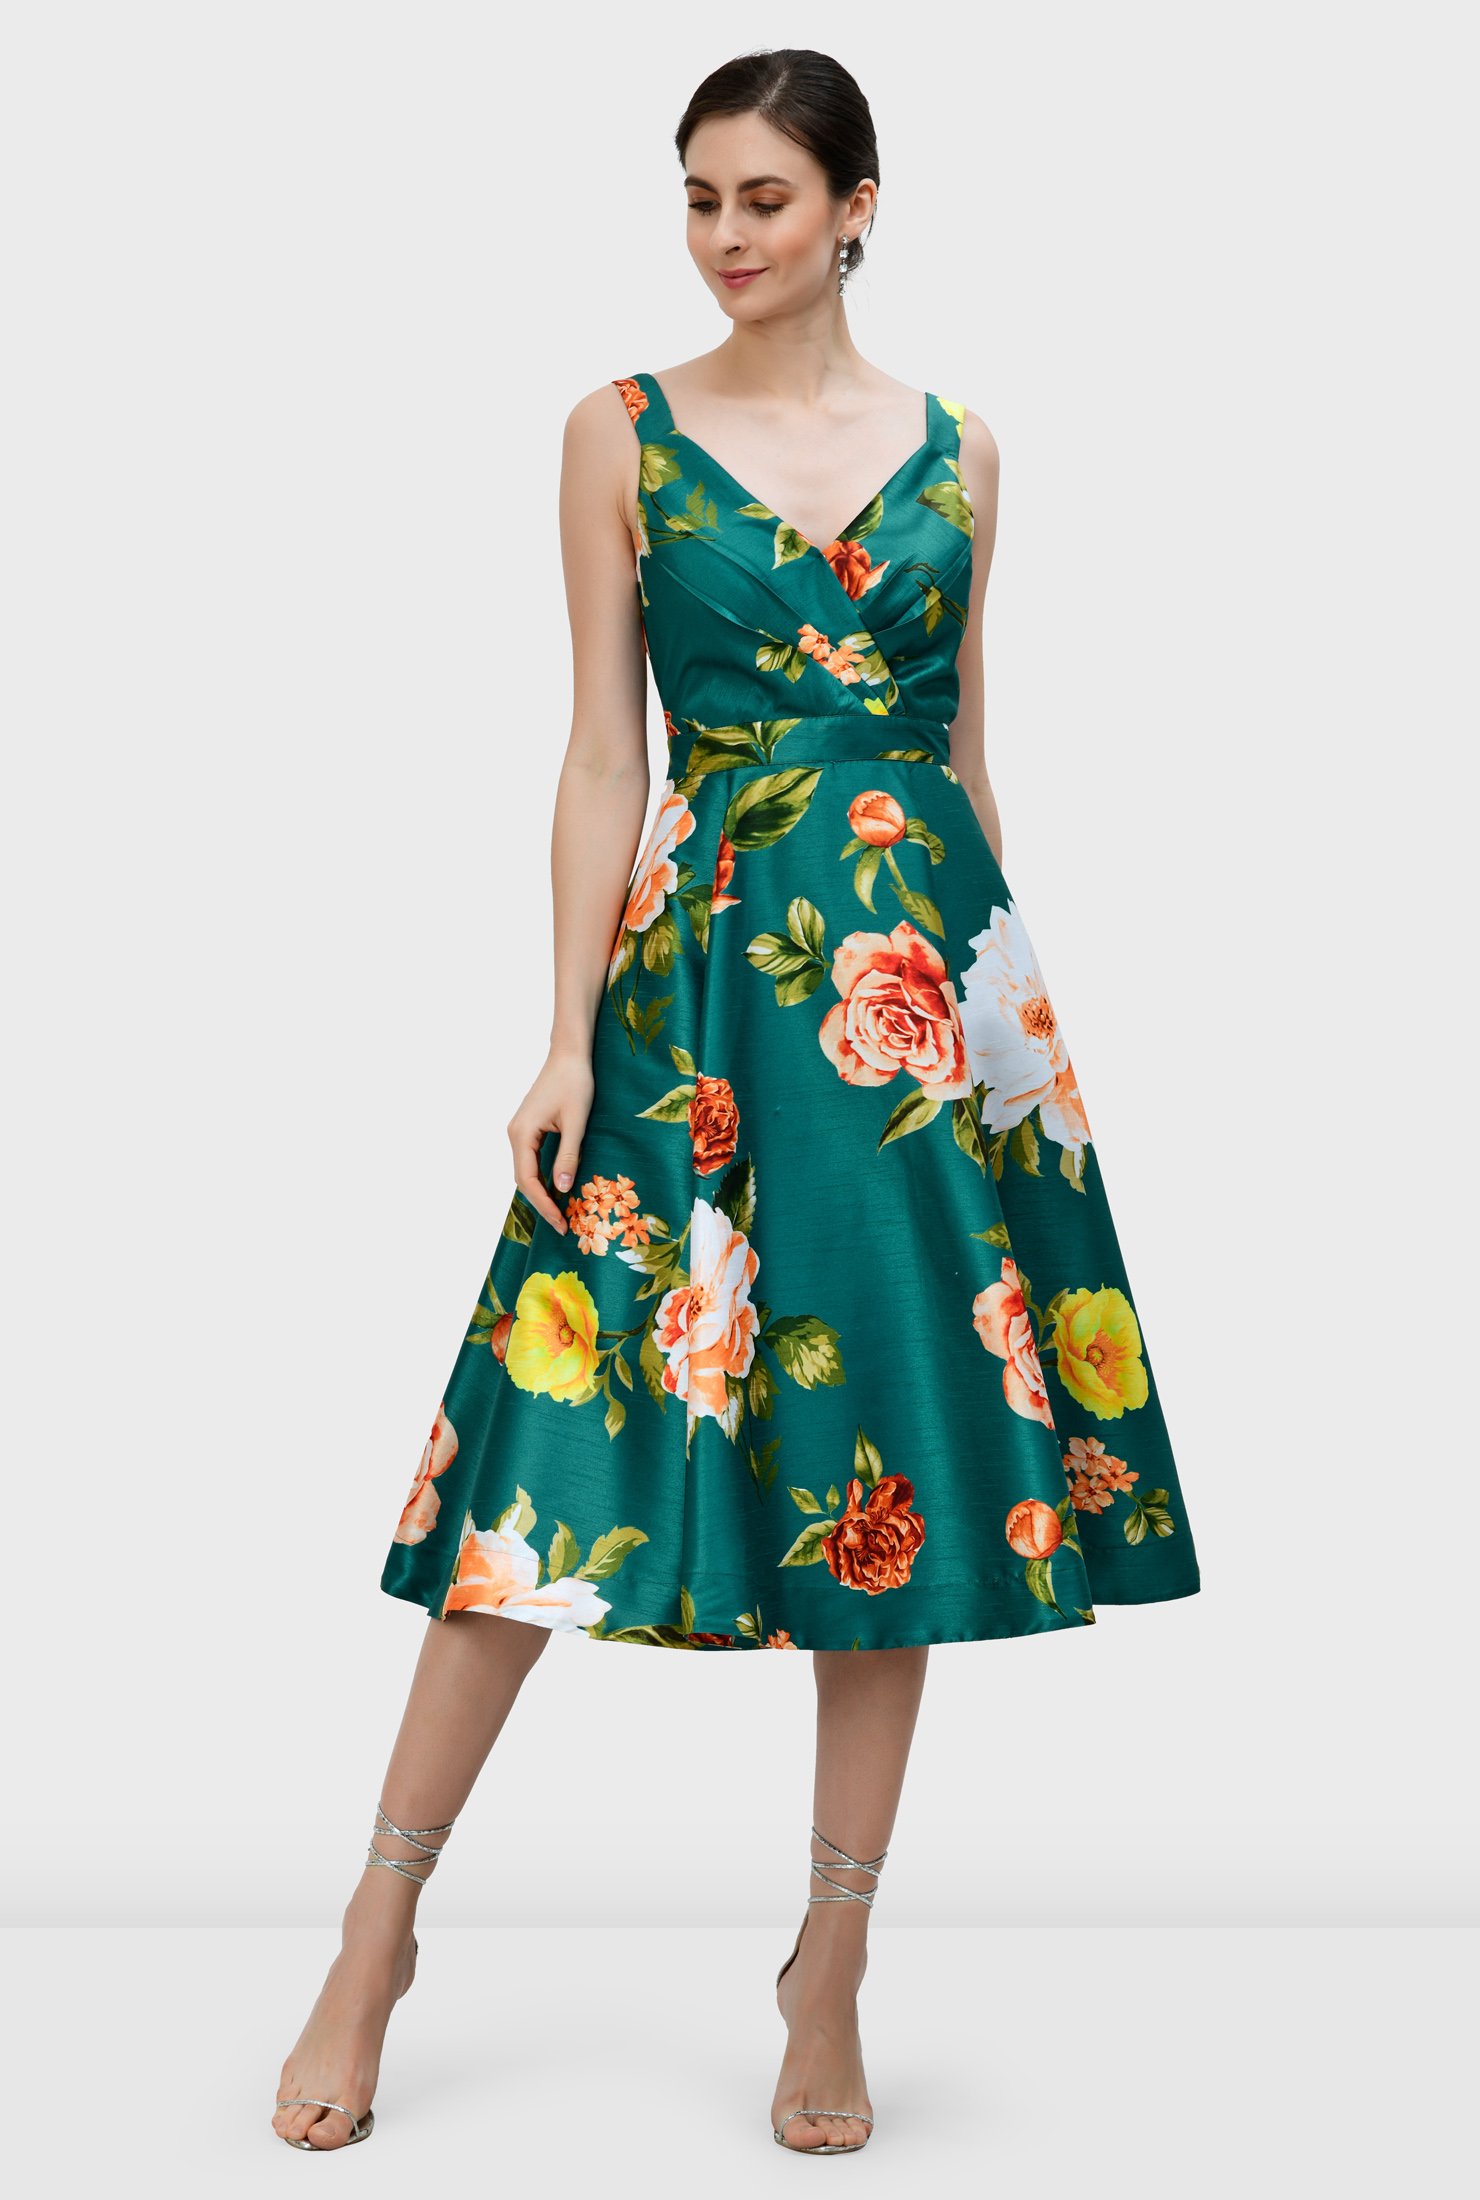 Shop Floral print dupioni surplice dress | eShakti